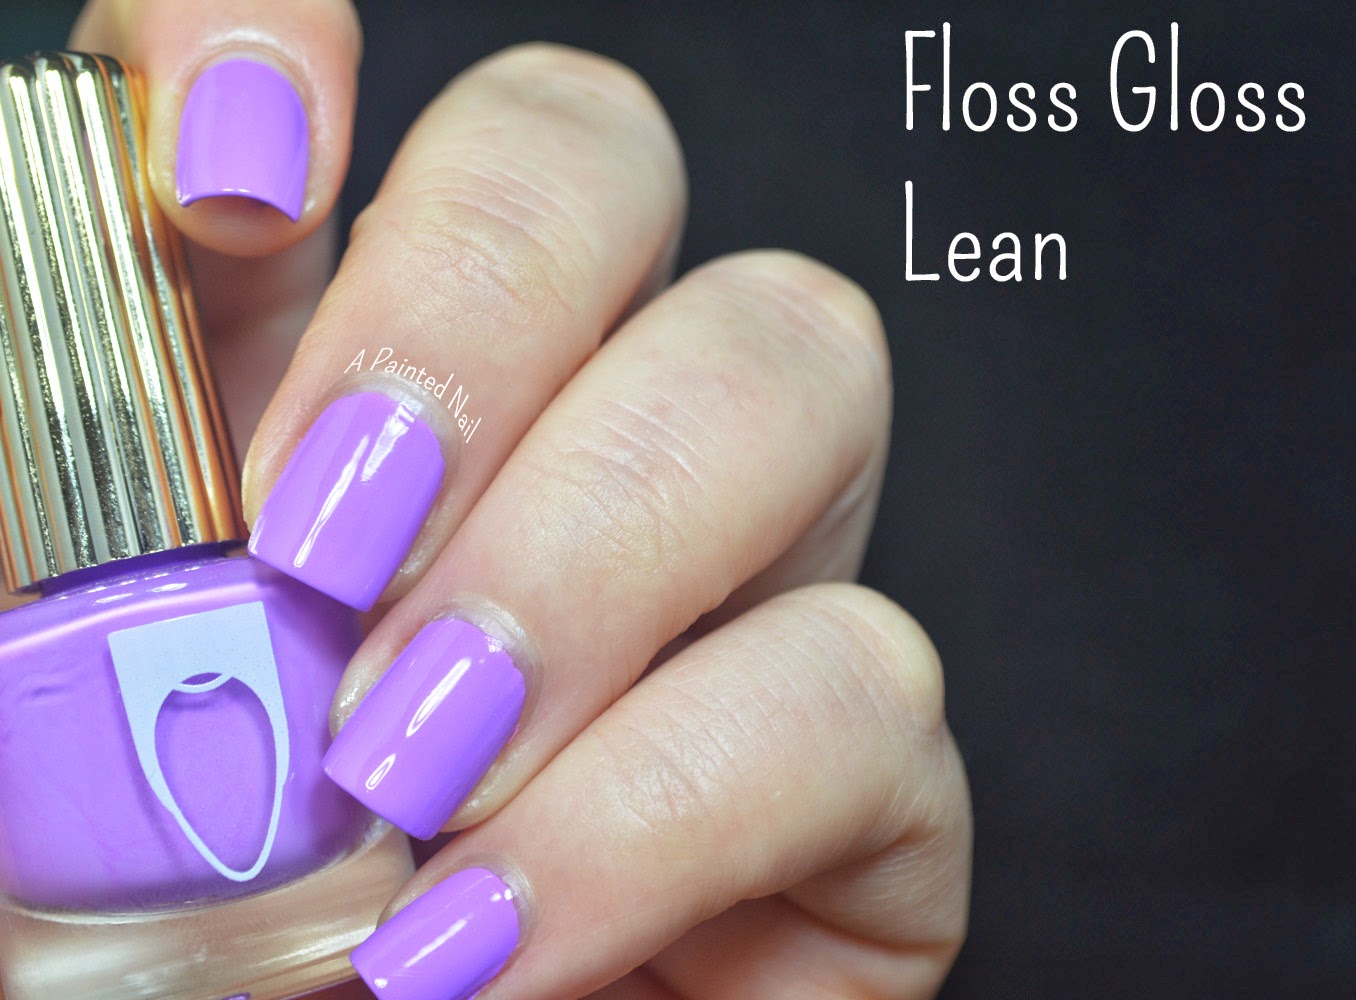 floss gloss nail art tutorial